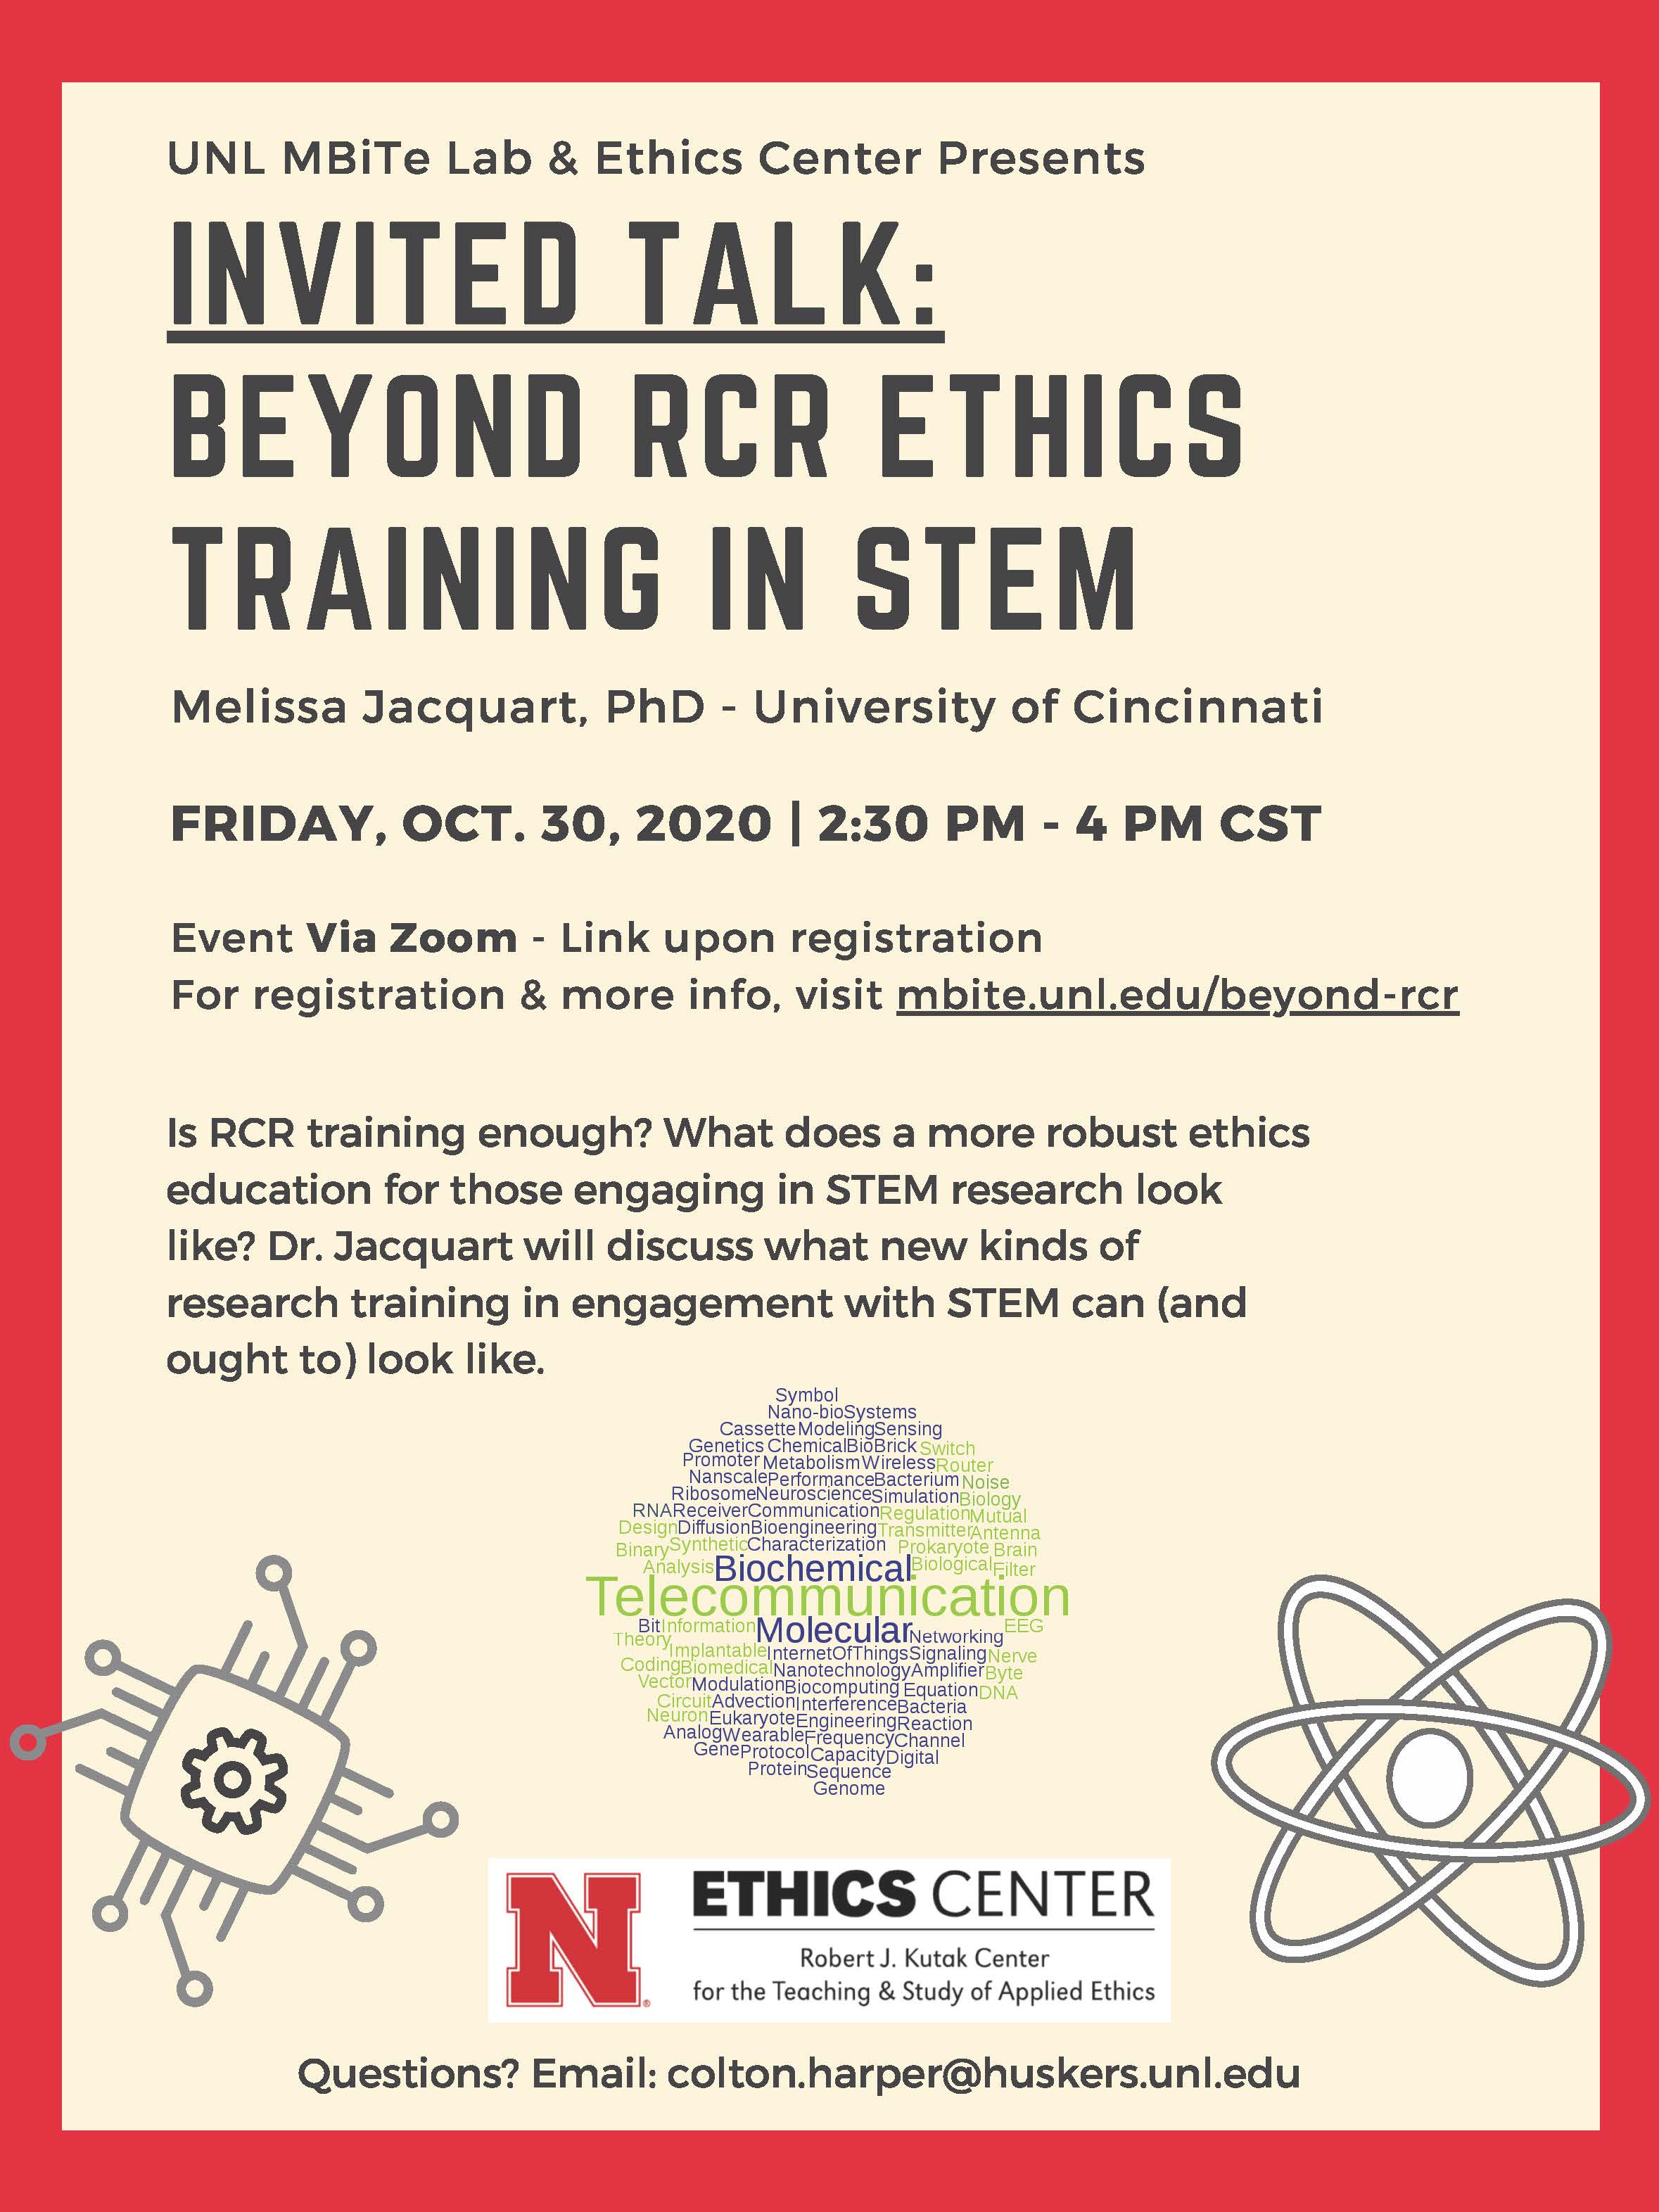 Beyond RCR Ethics Training in STEM